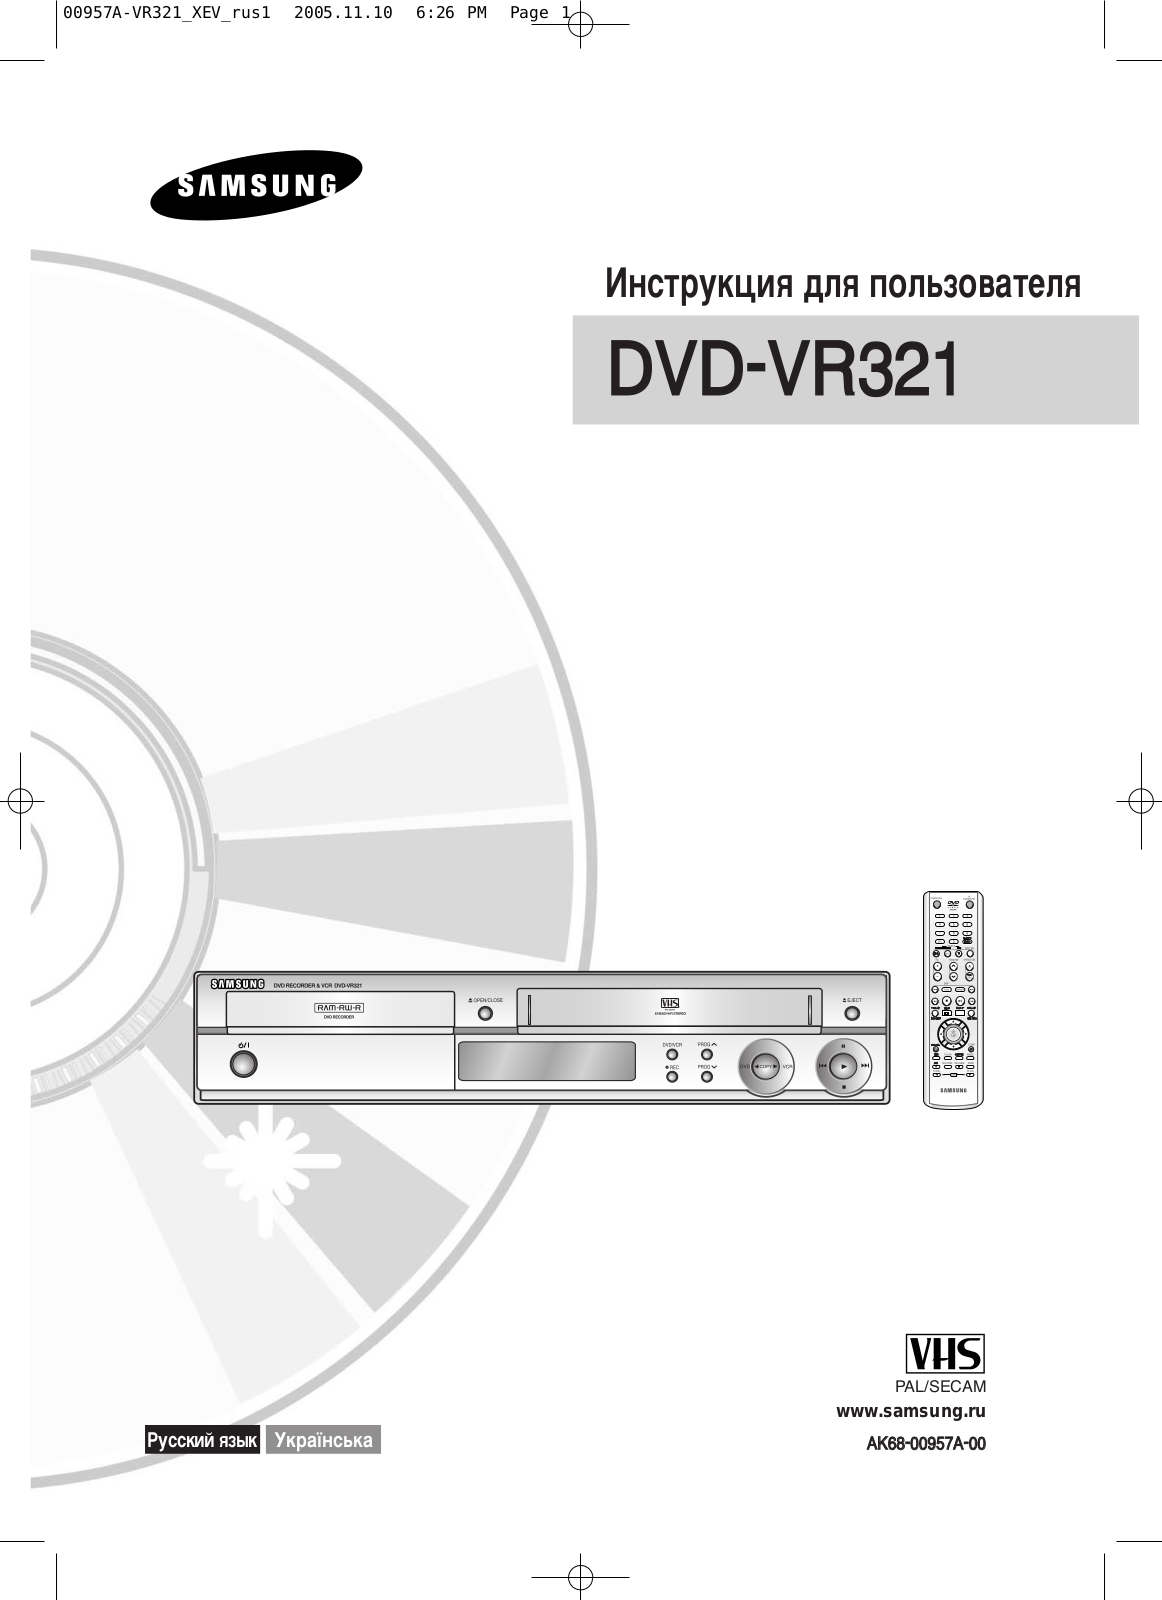 Samsung DVD-VR321 User Manual